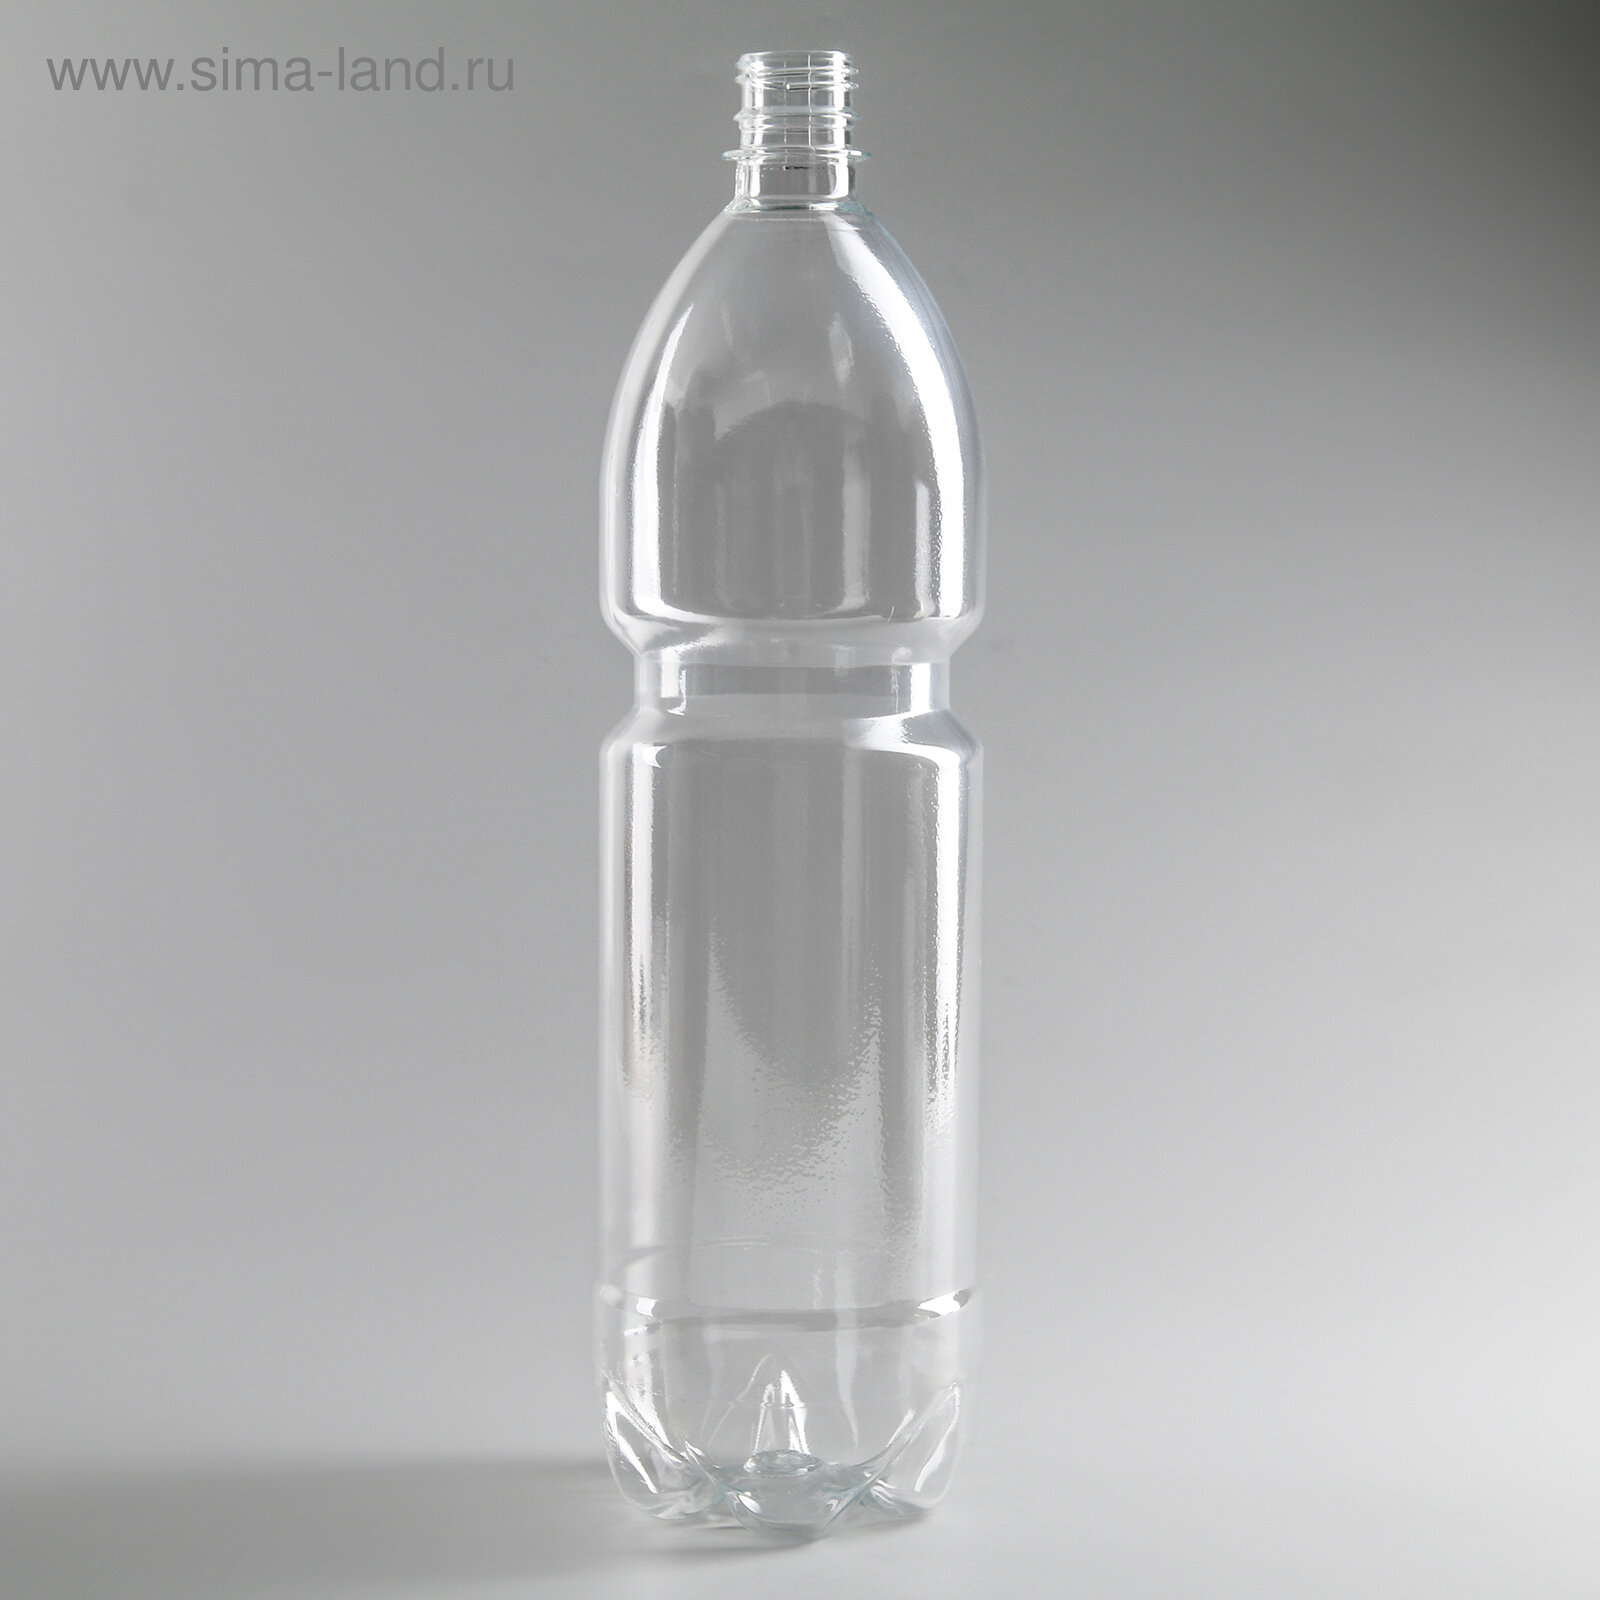 Бутылка пластиковая одноразовая, 1,5 л, ПЭТ, без крышки, цвет прозрачный